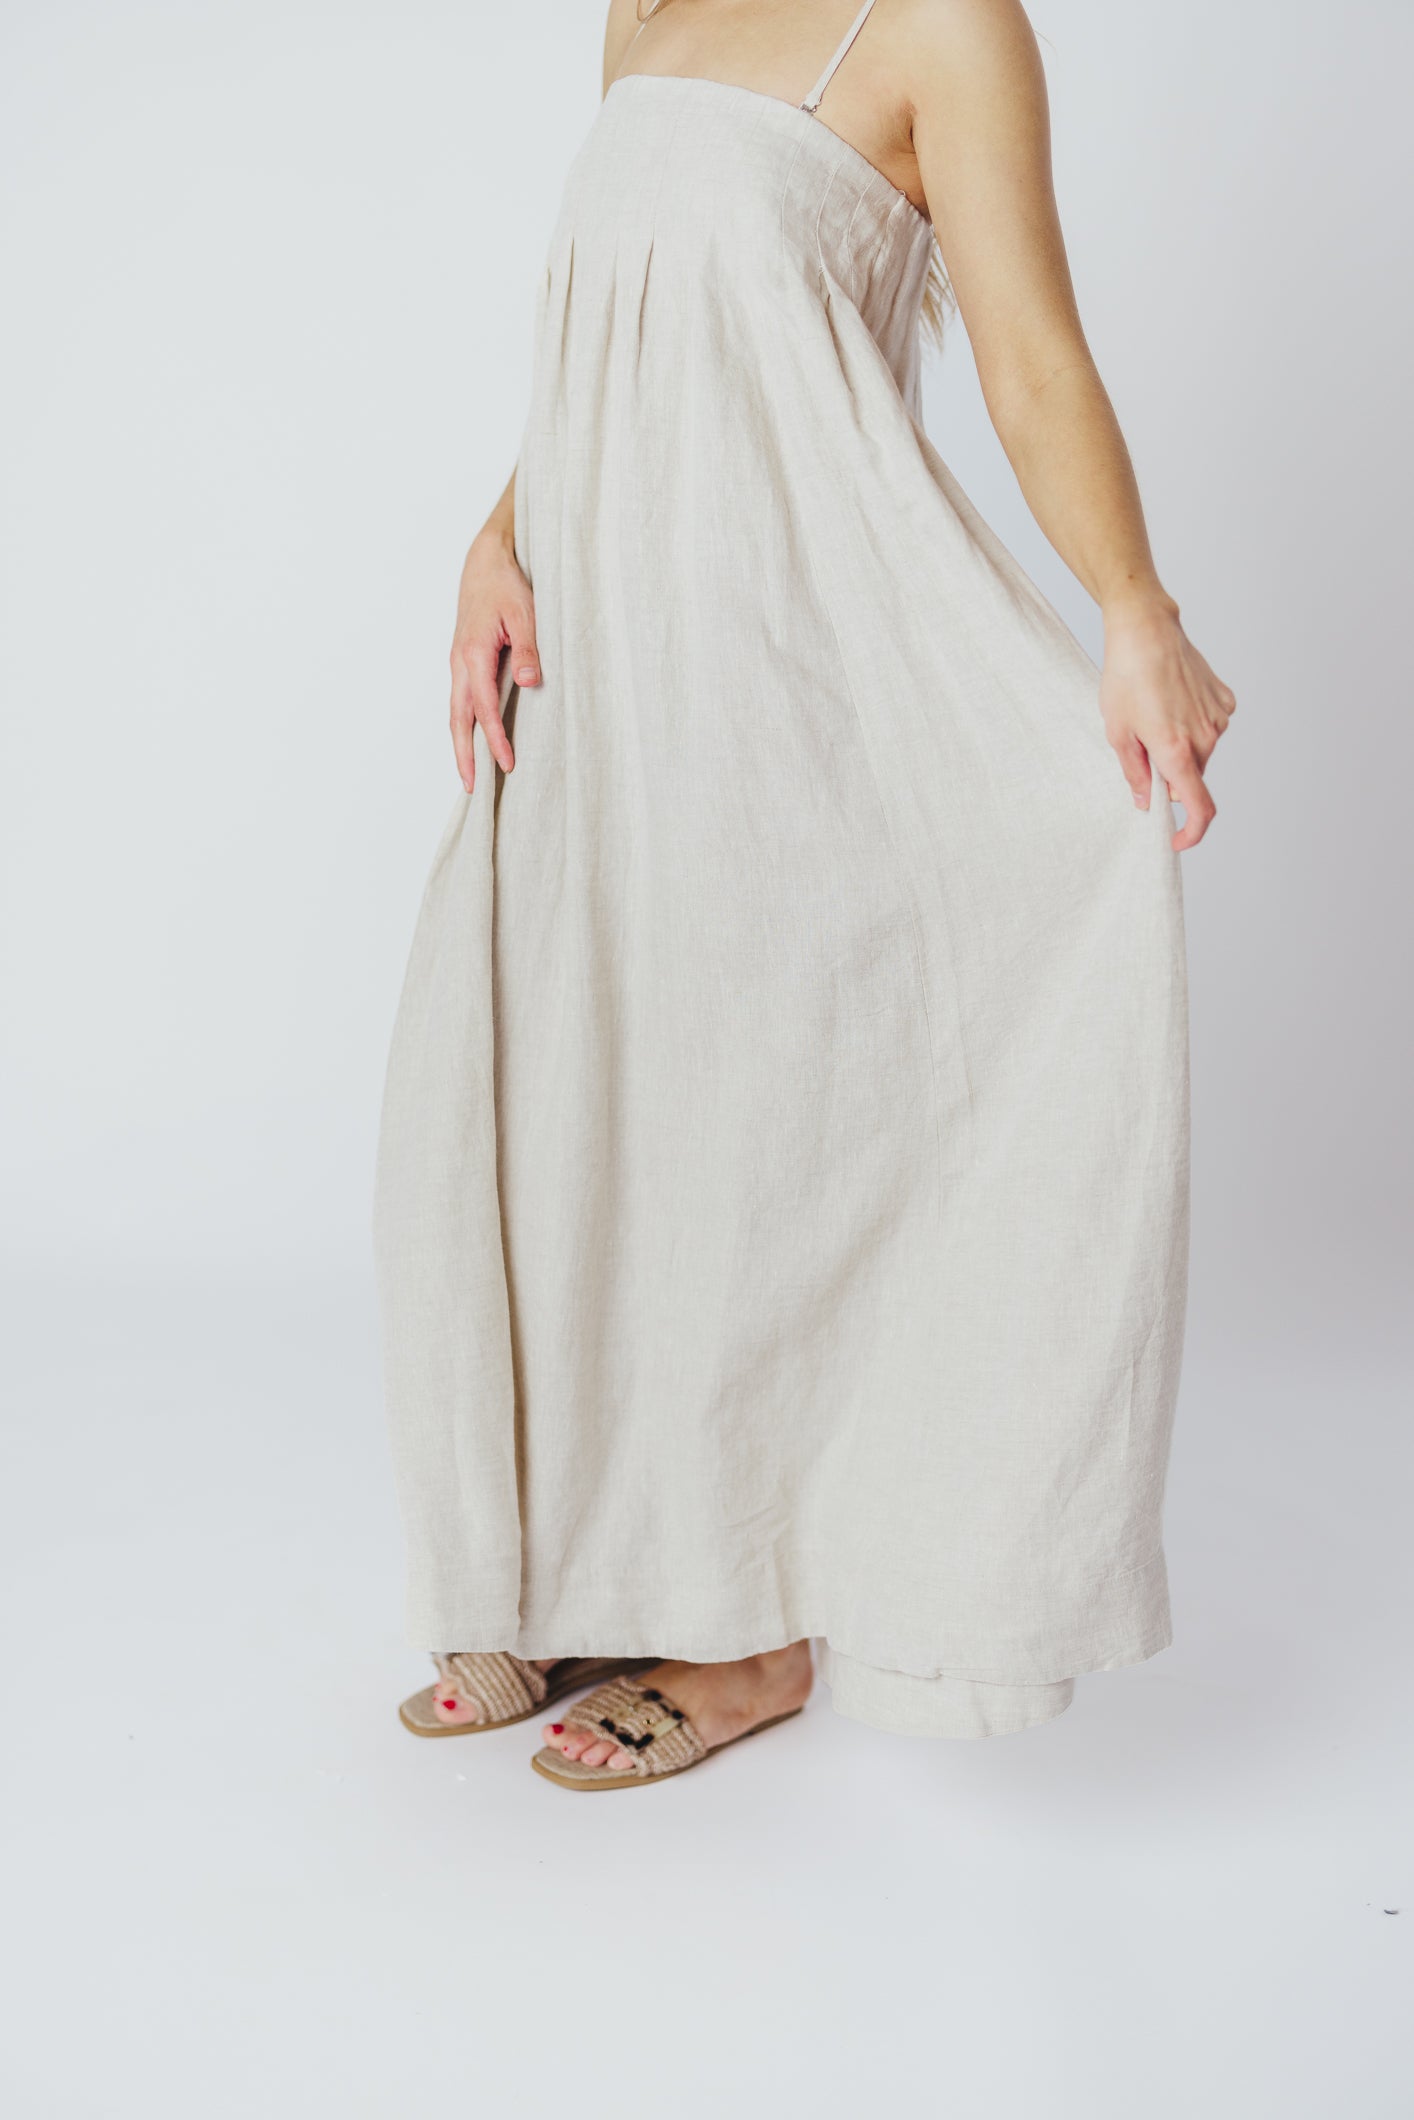 Zabina Maxi Dress in Linen - 100% Linen